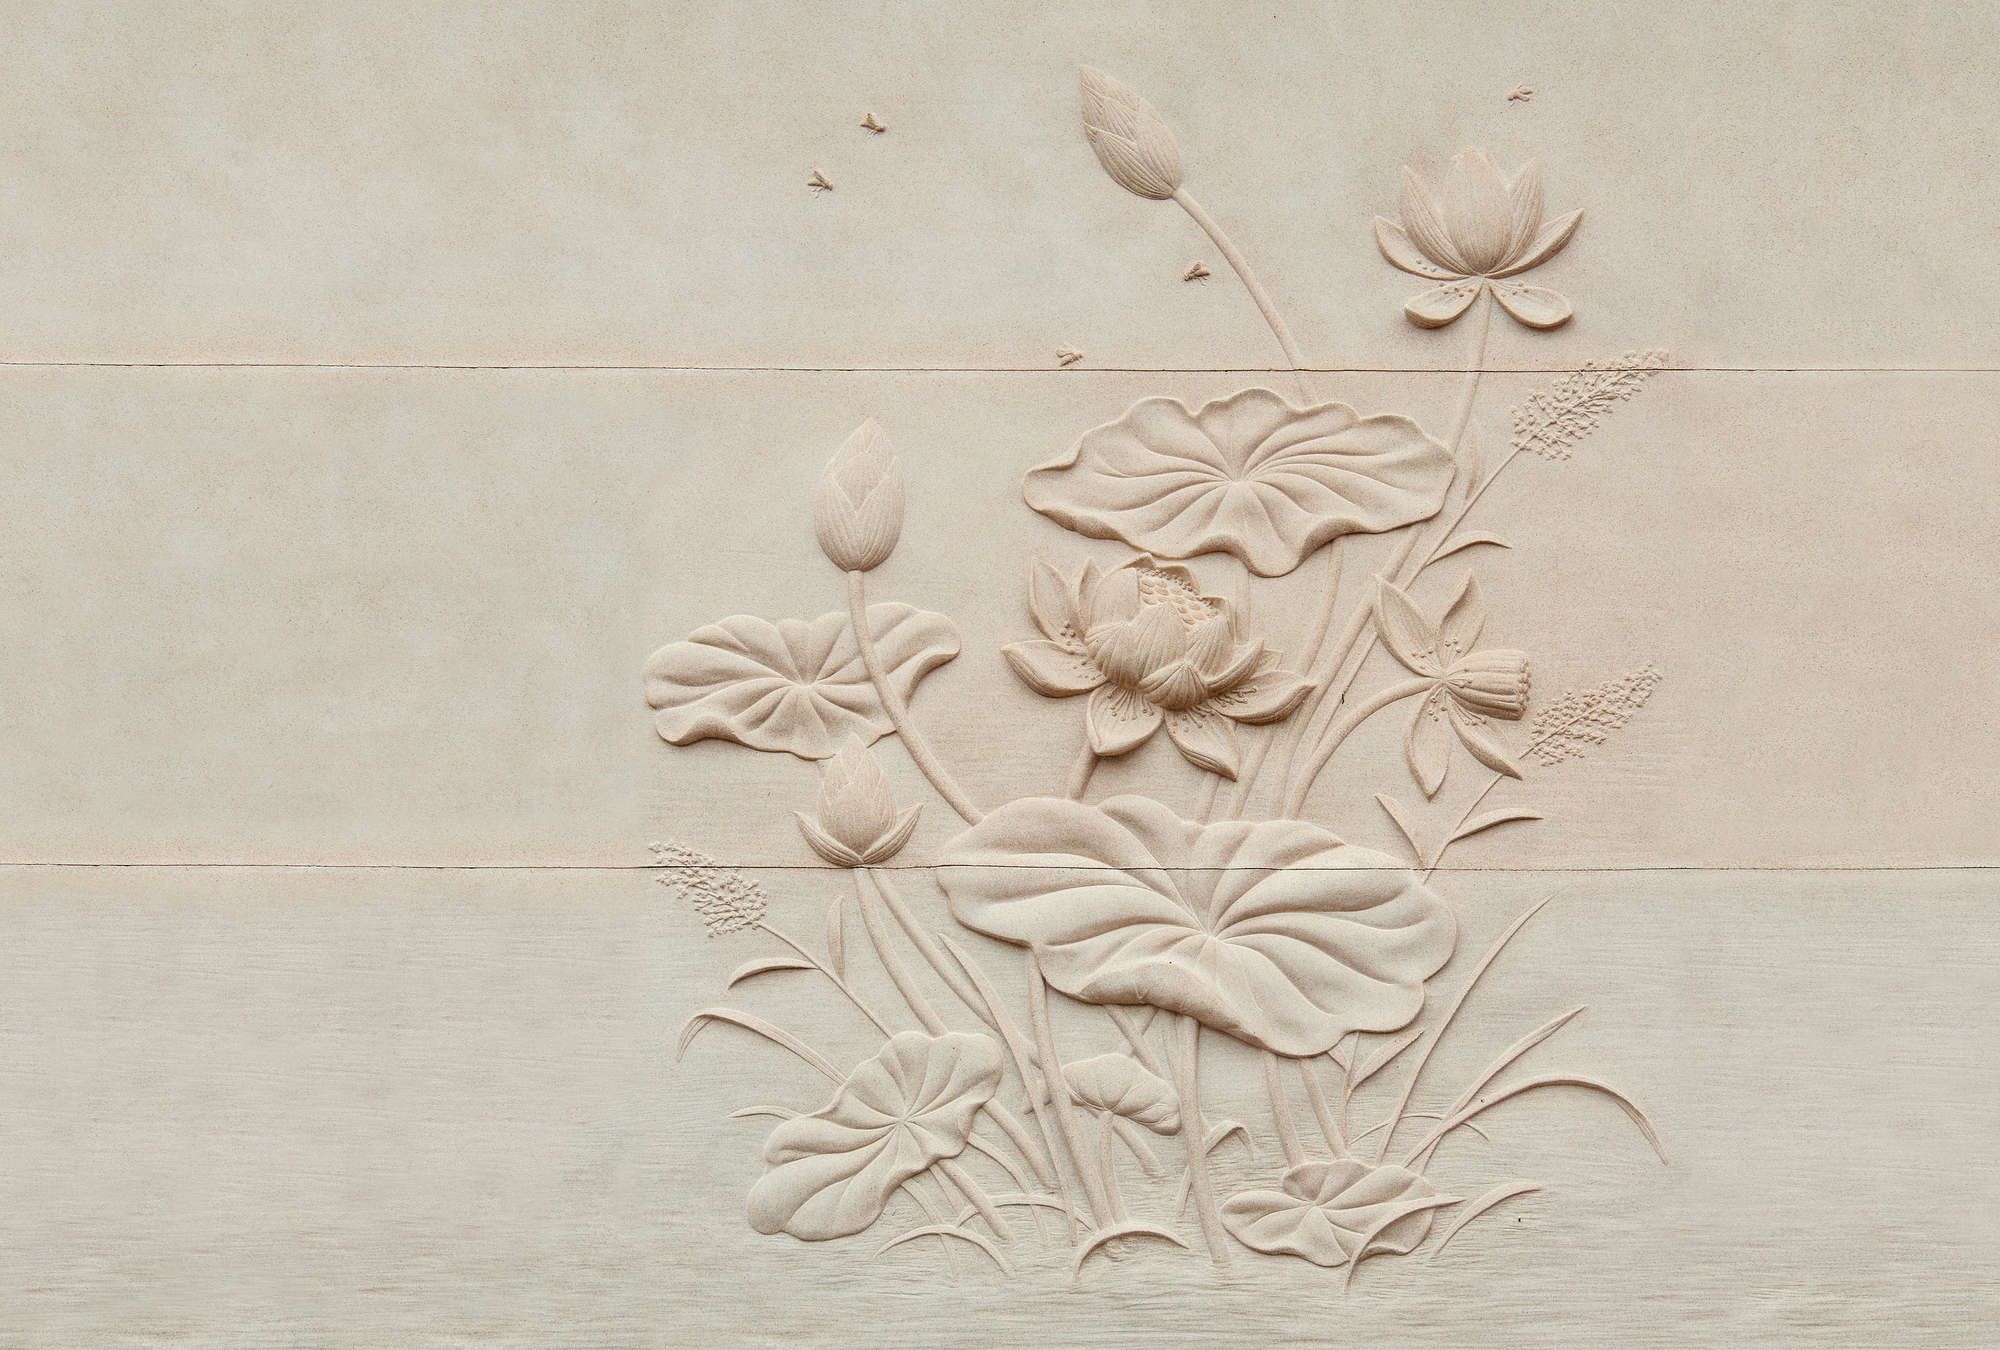             Fotomural »fiore« - Relieve floral sobre estructura de hormigón - Tela no tejida mate, lisa
        